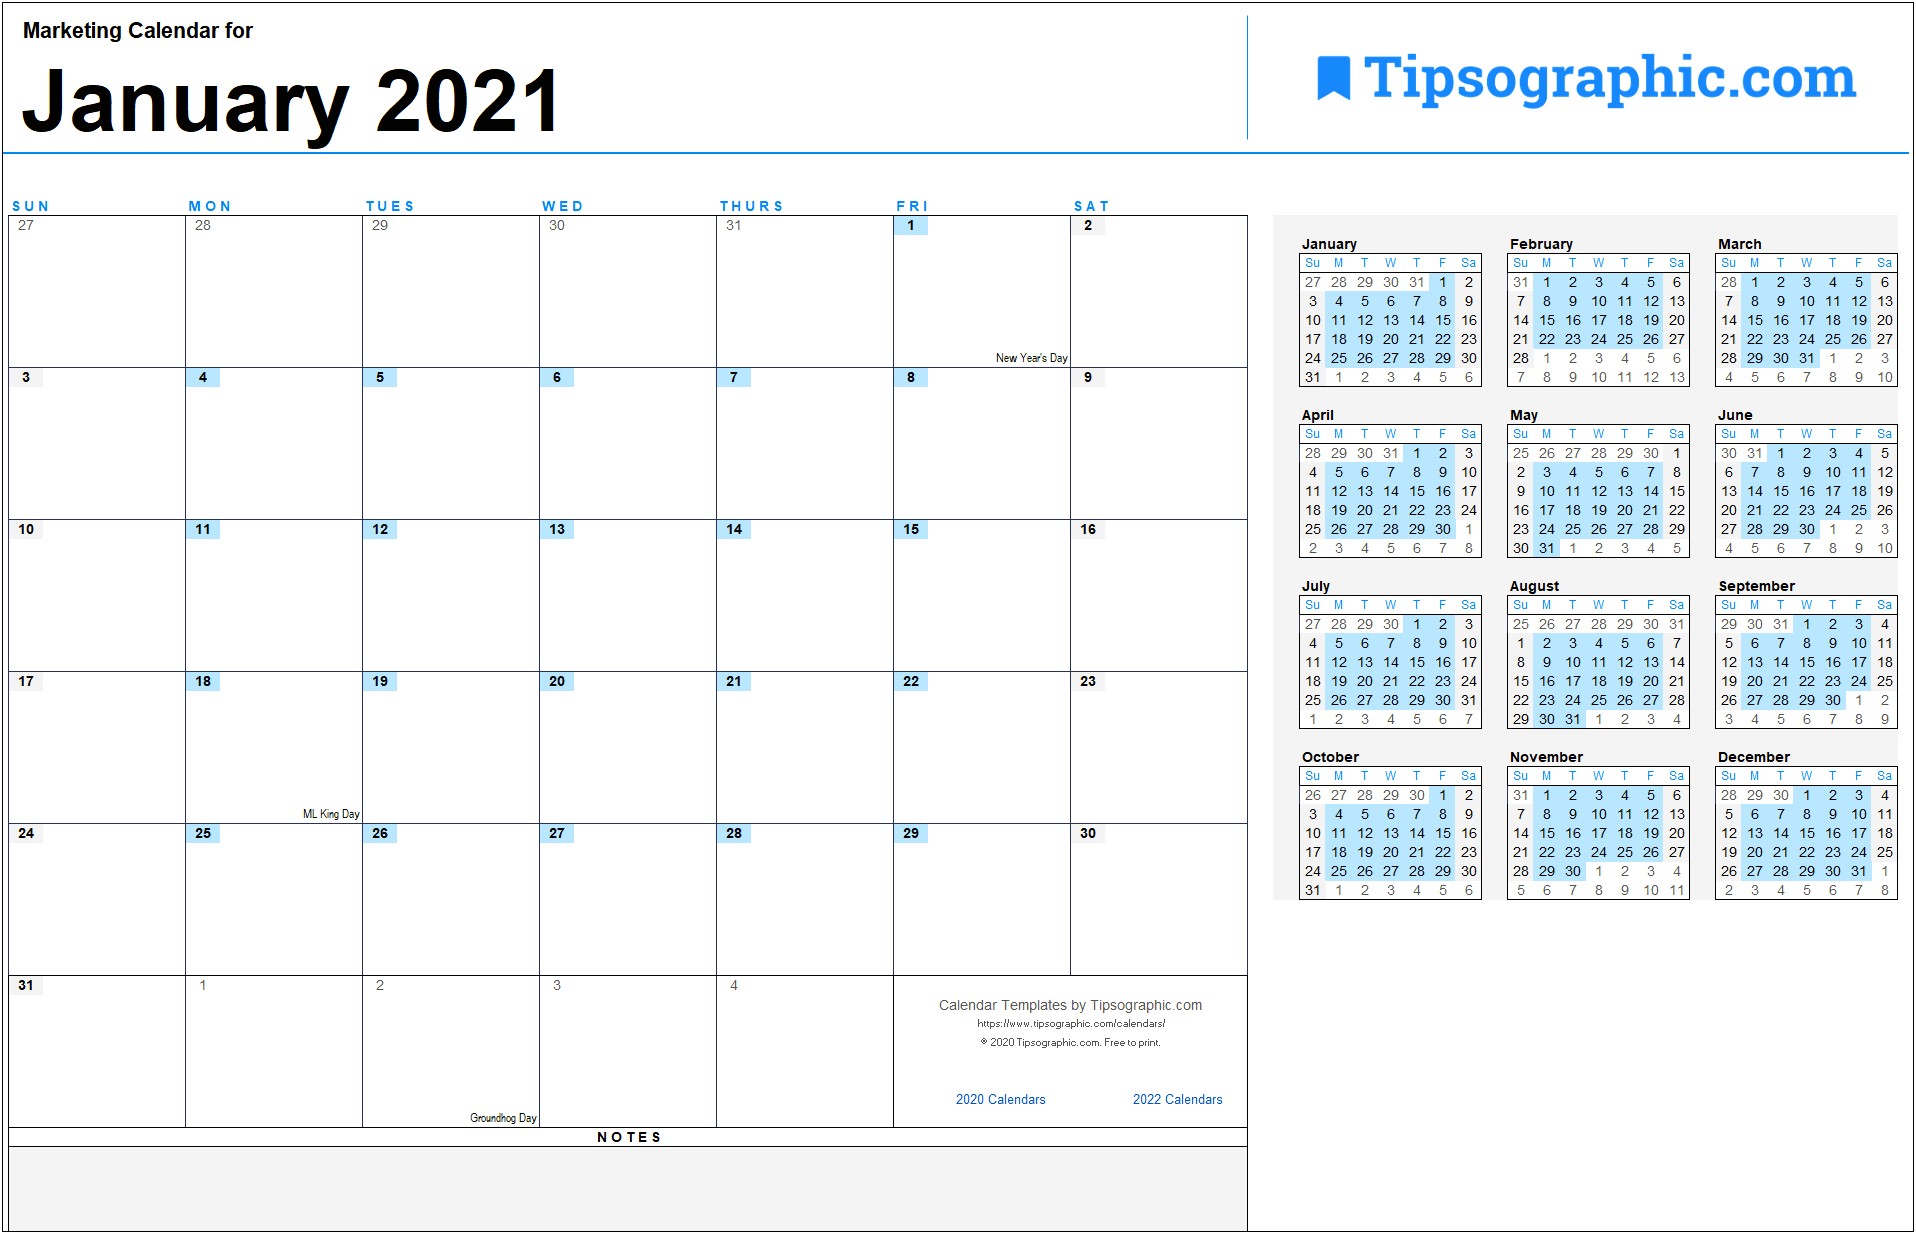 Free 2020 Biweekly Payroll Calendar Template